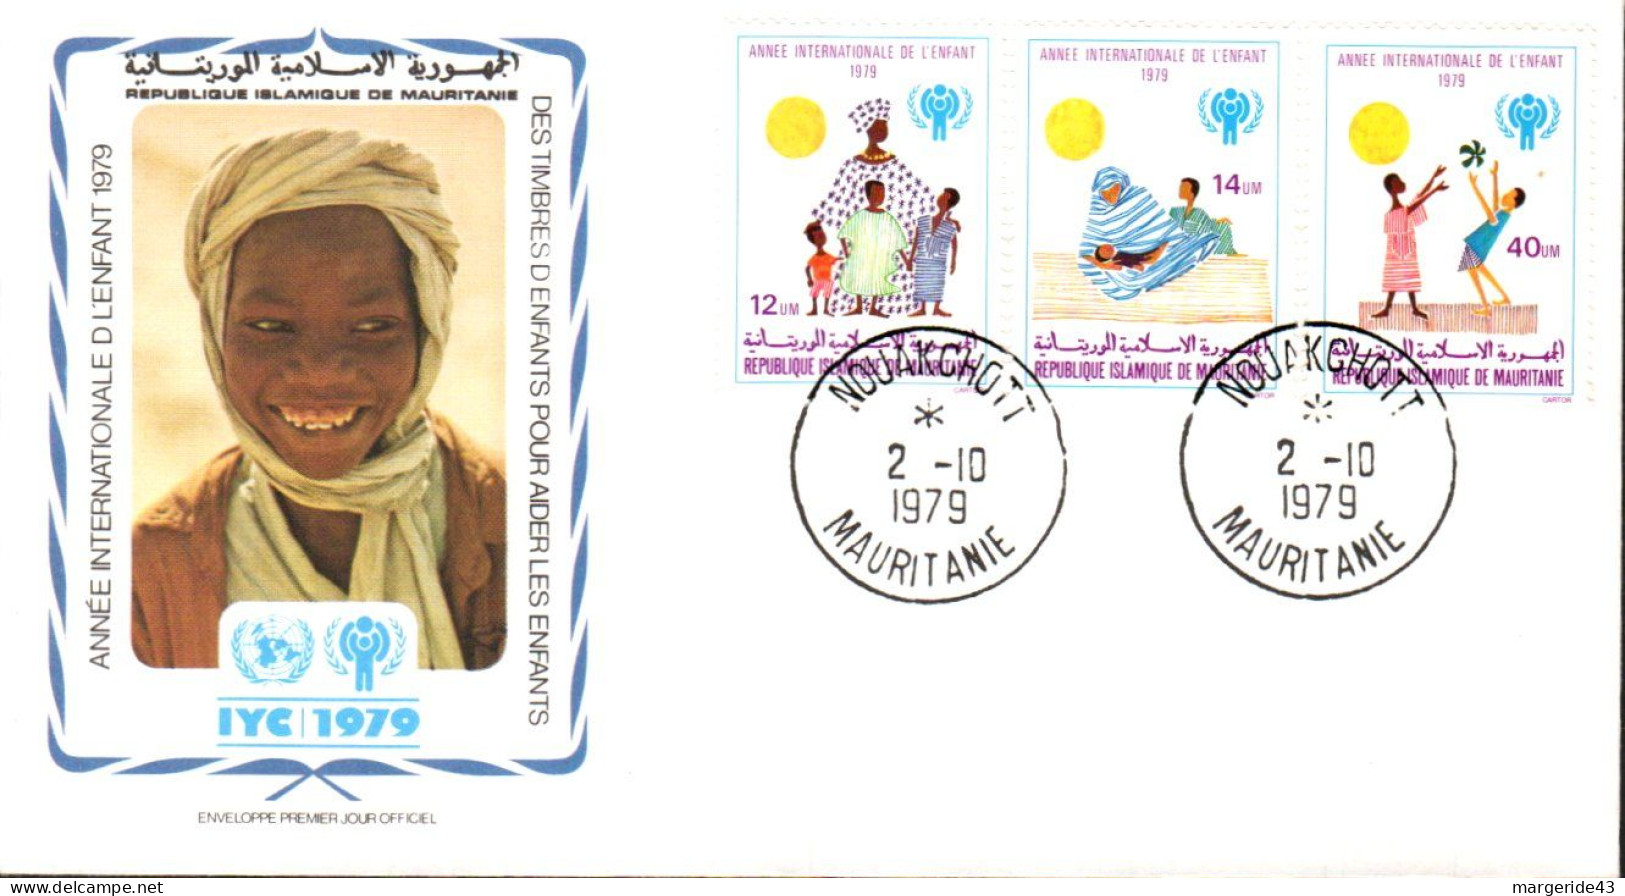 MAURITANIE FDC 1979 ANNEE DE L'ENFANT UNICEF - Mauritania (1960-...)